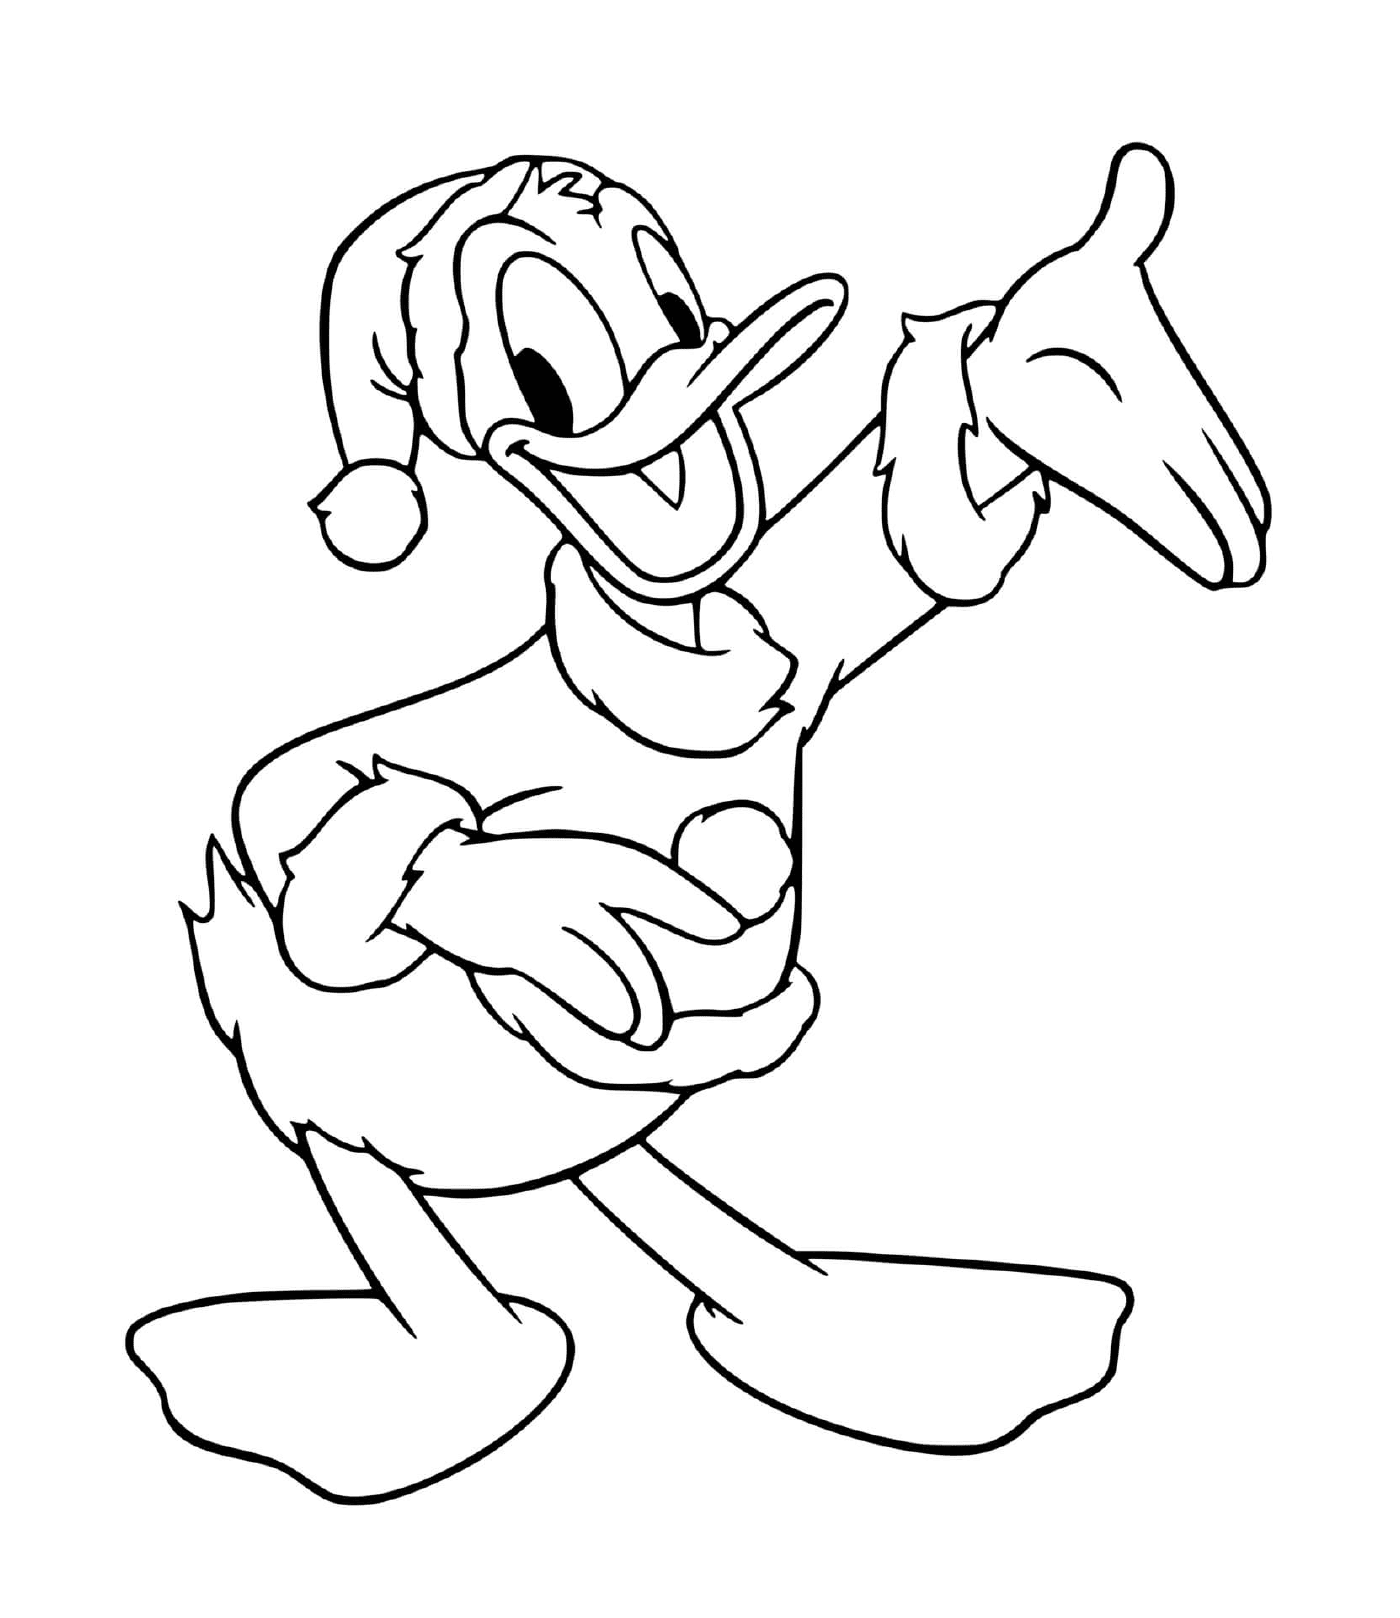  Donald duck in Santa Clauds 圣诞老人中的唐纳德鸭 